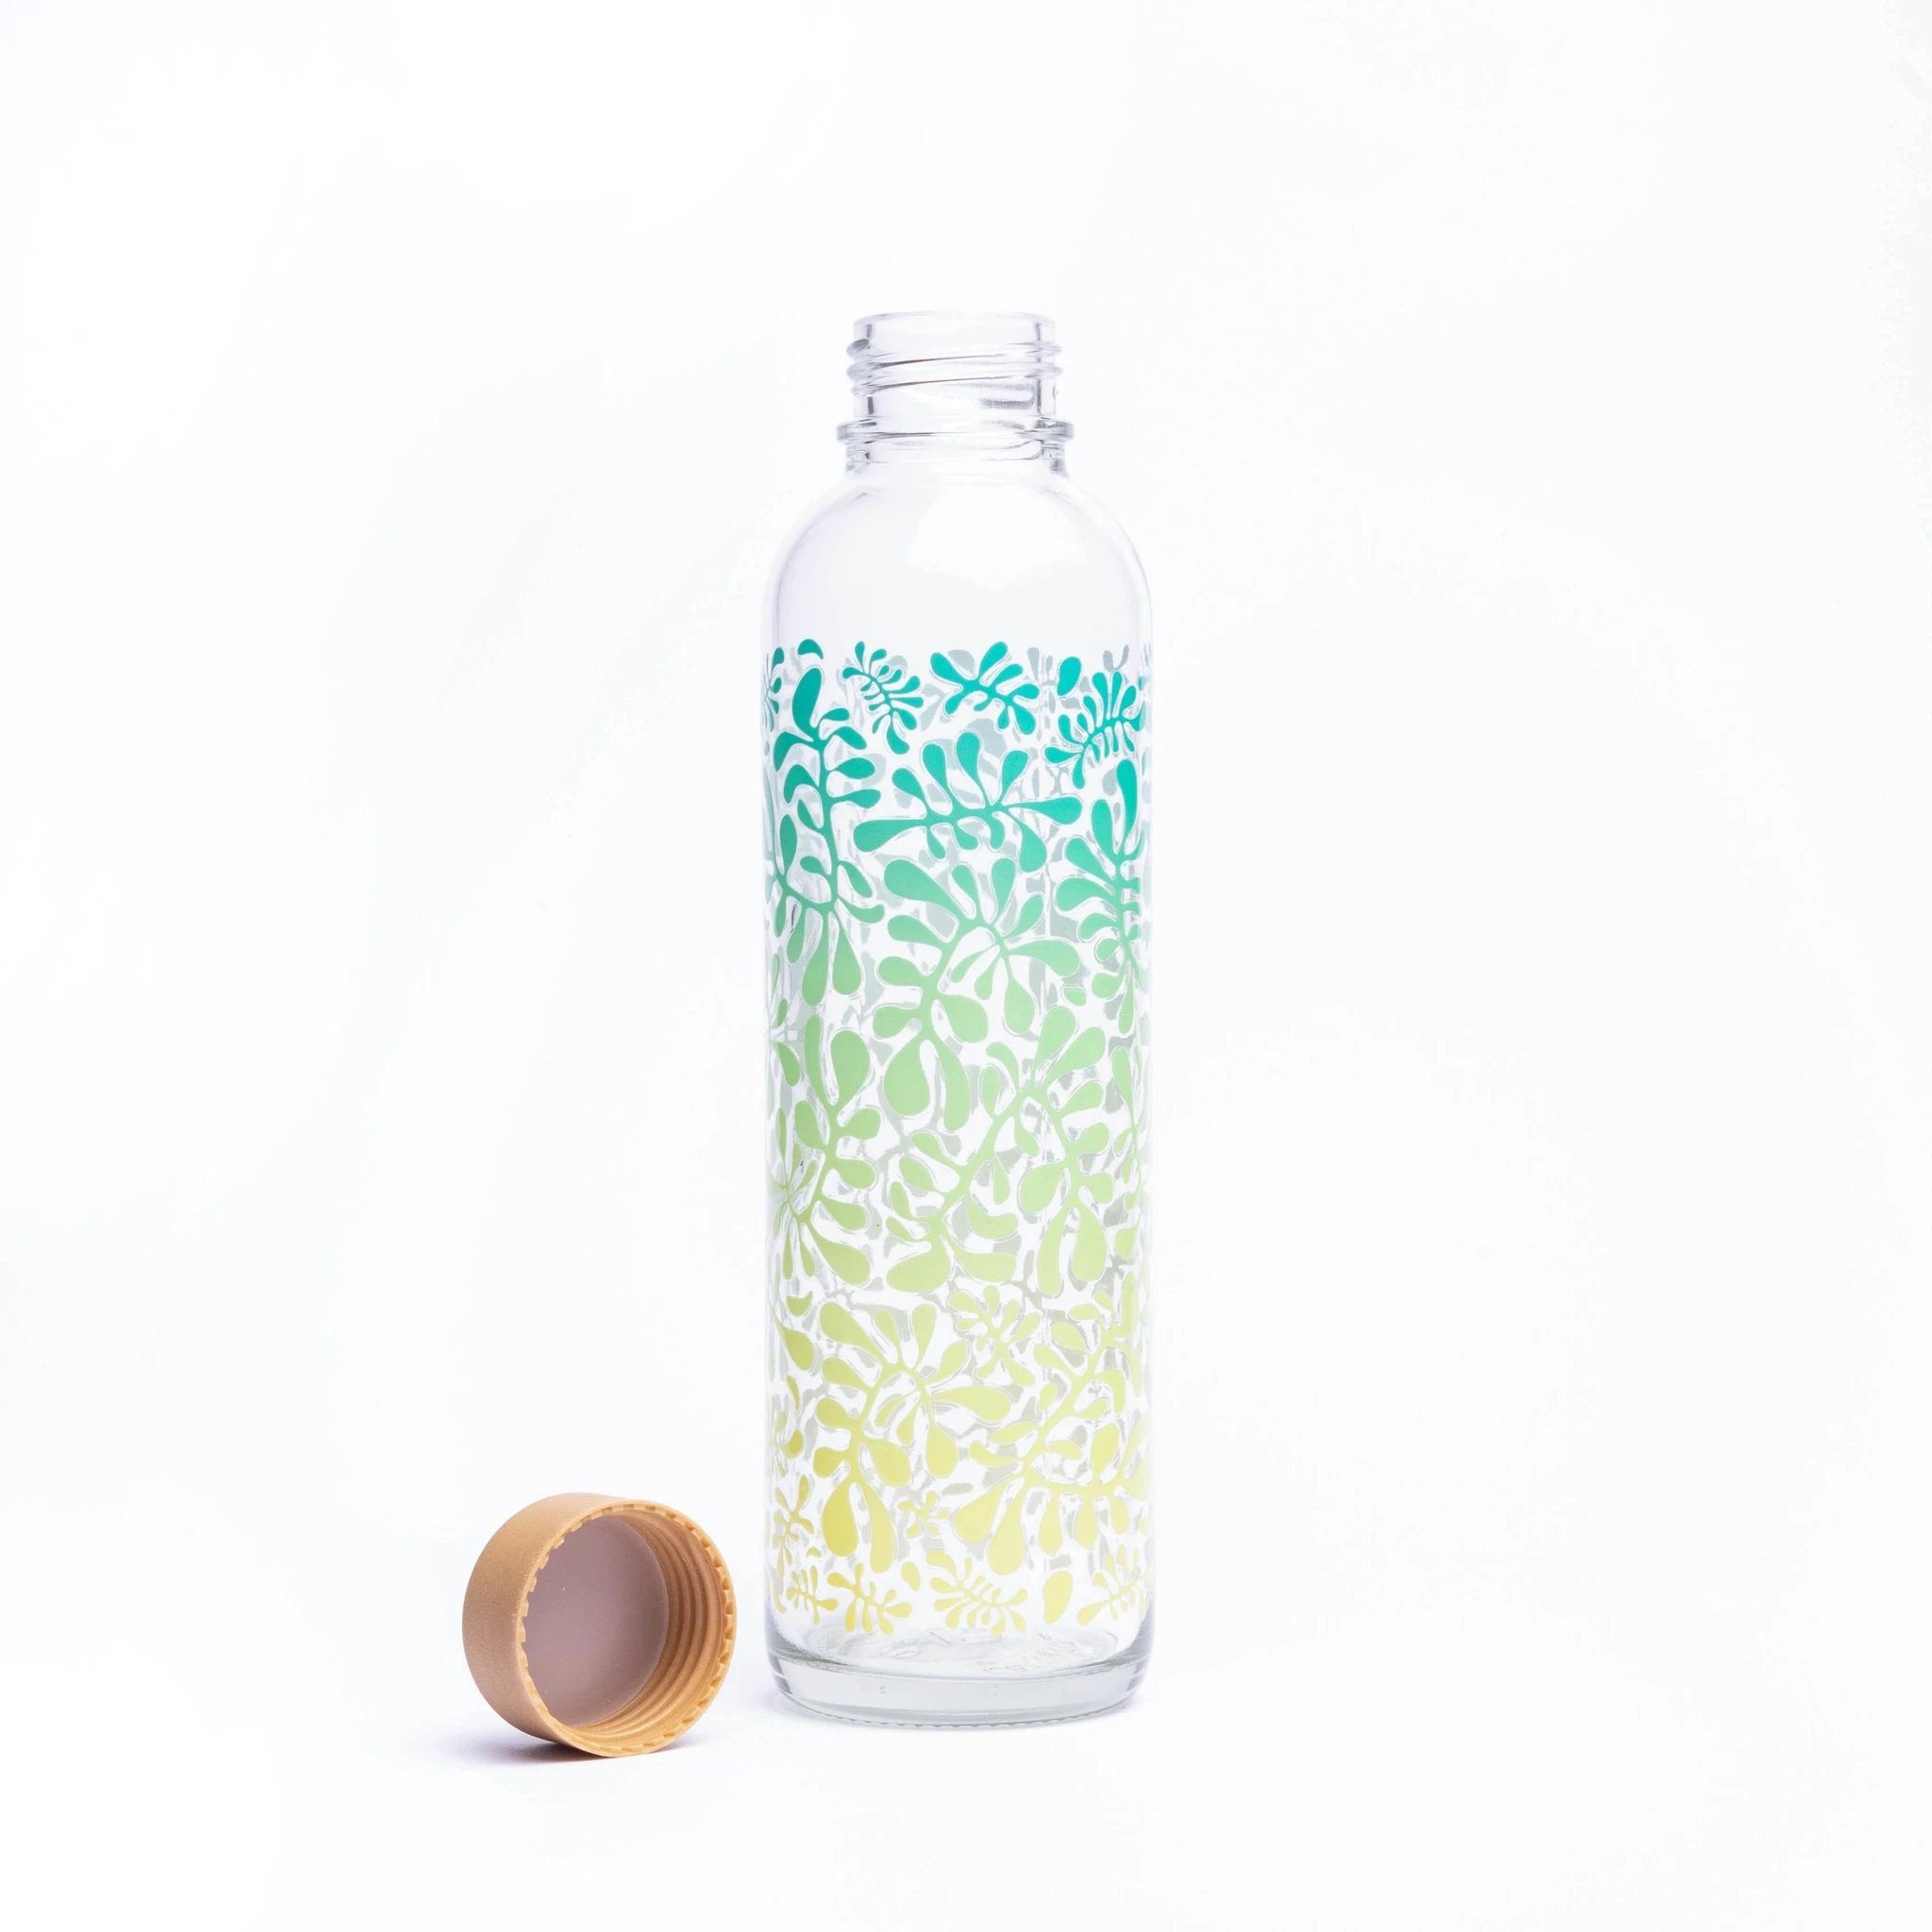 Trinkflasche produziert CARRY yogabox SEA FOREST, Regional l 0.7